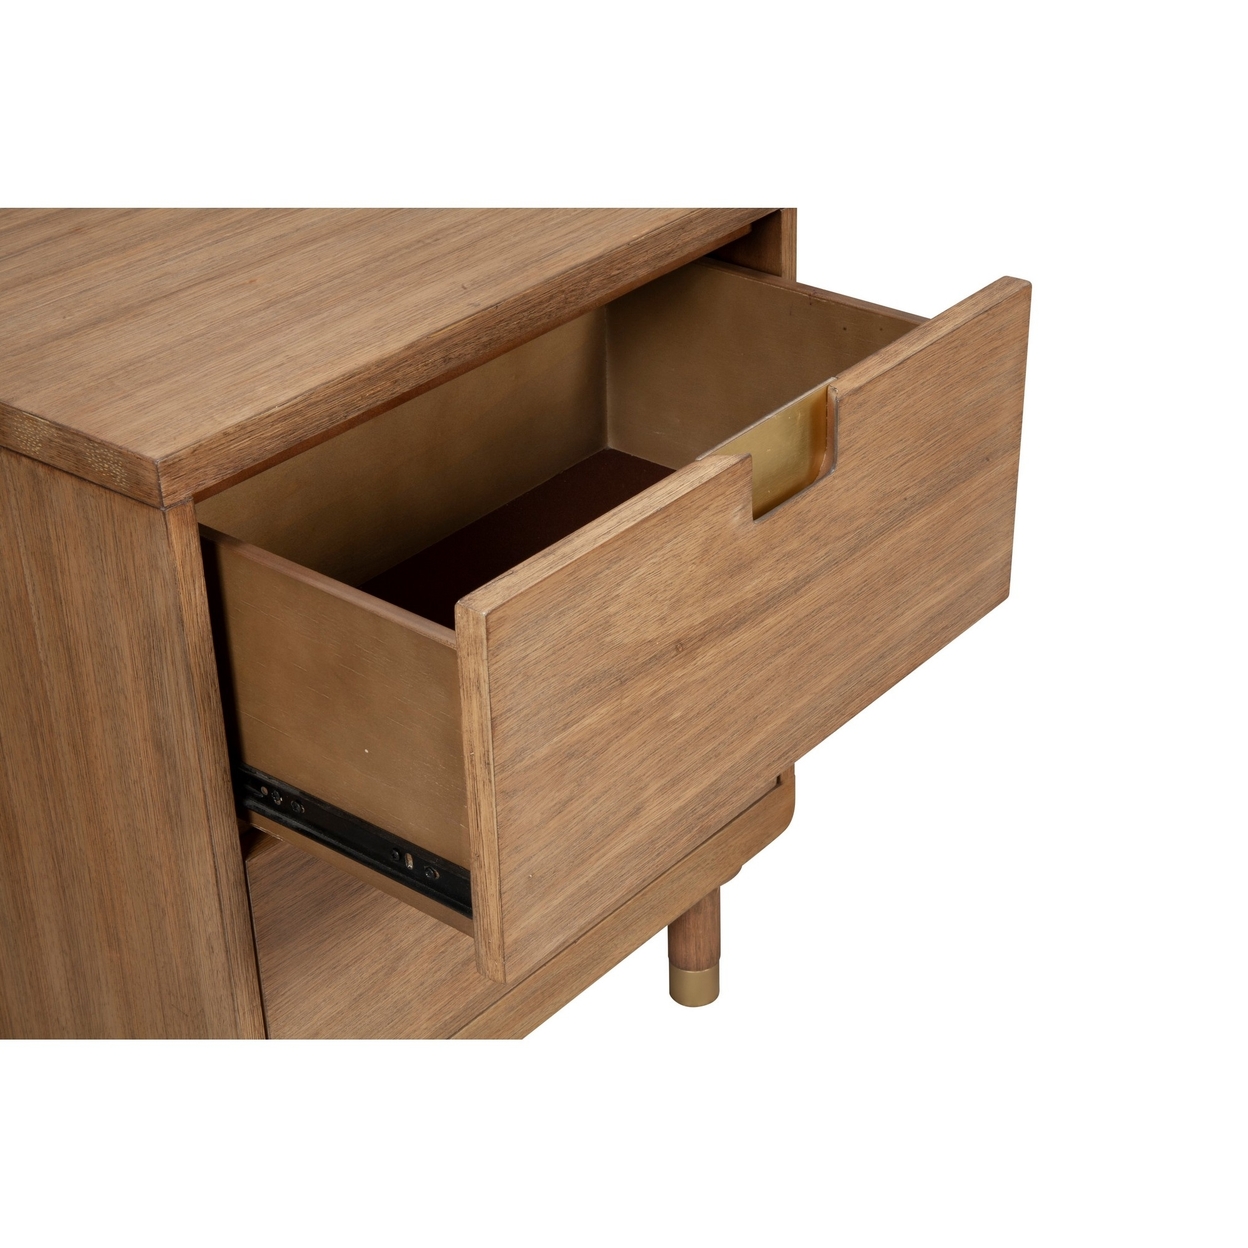 25 Inch 2 Drawer Wooden Nightstand With Cutout Pulls, Brown- Saltoro Sherpi